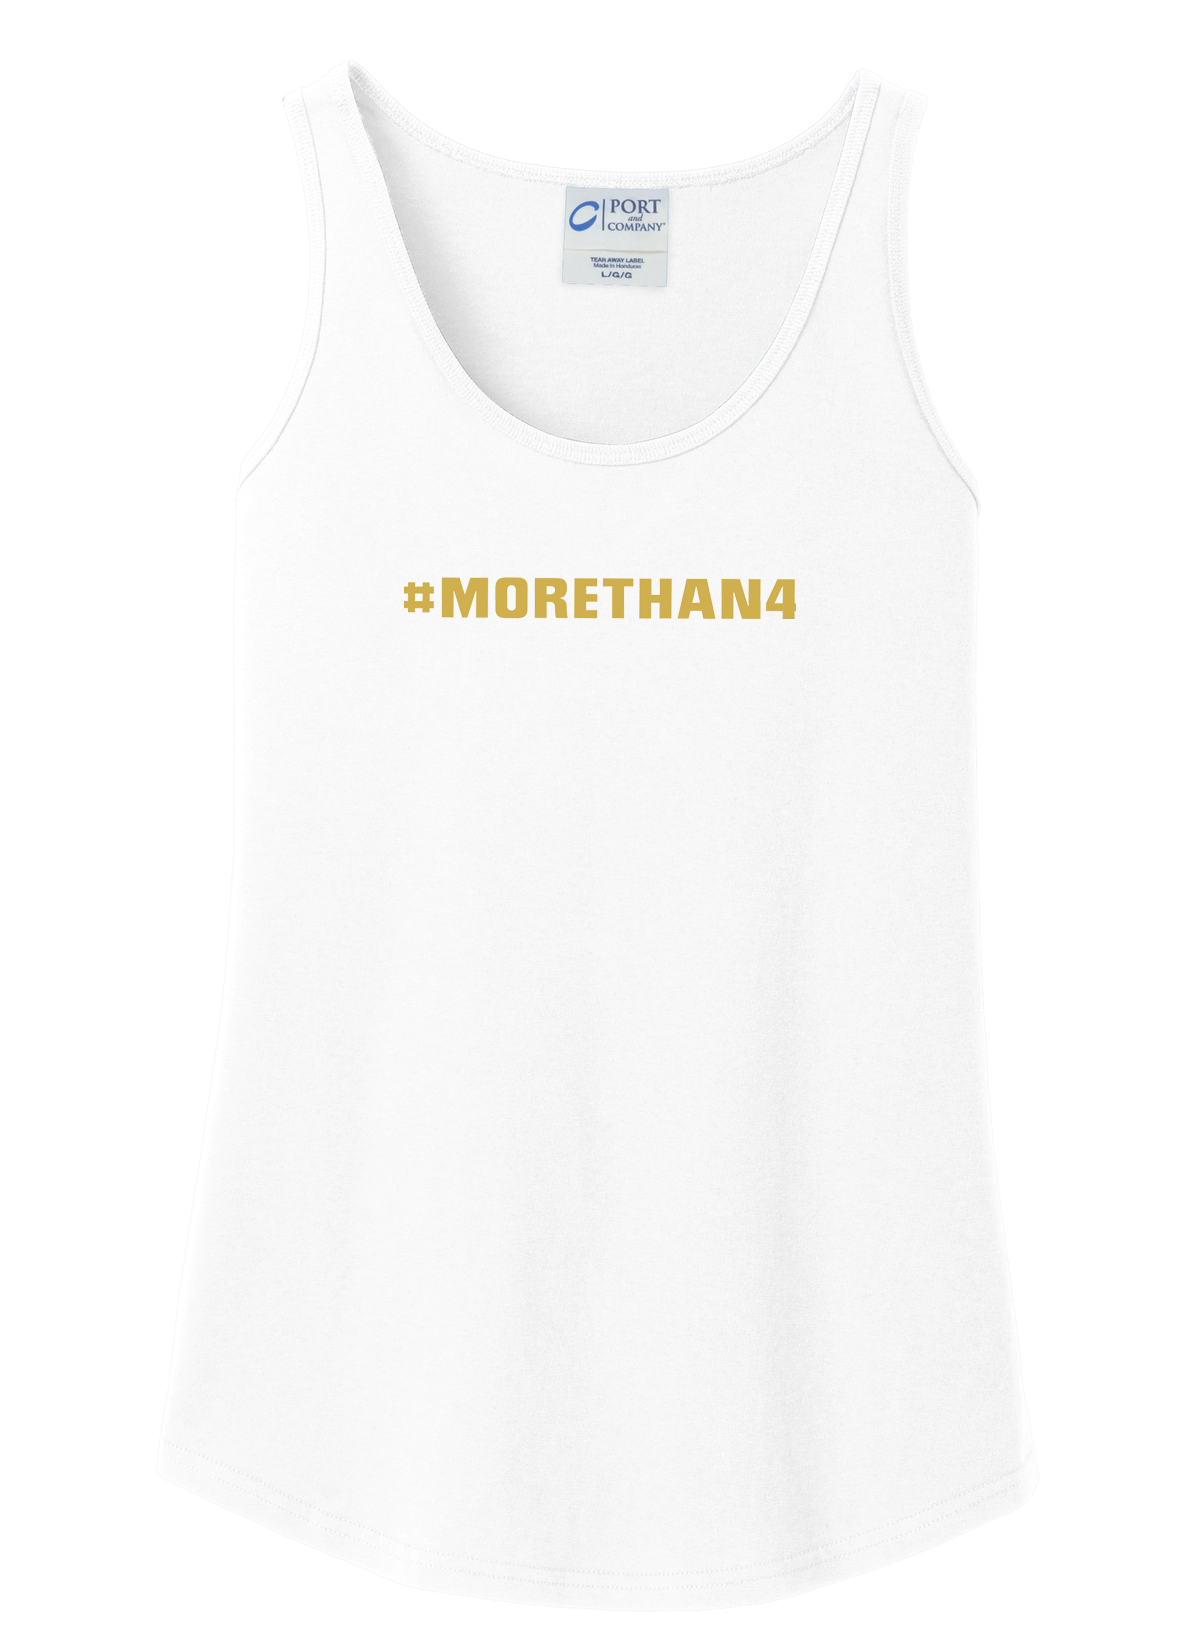 #MORETHAN4 Women's Tank Top